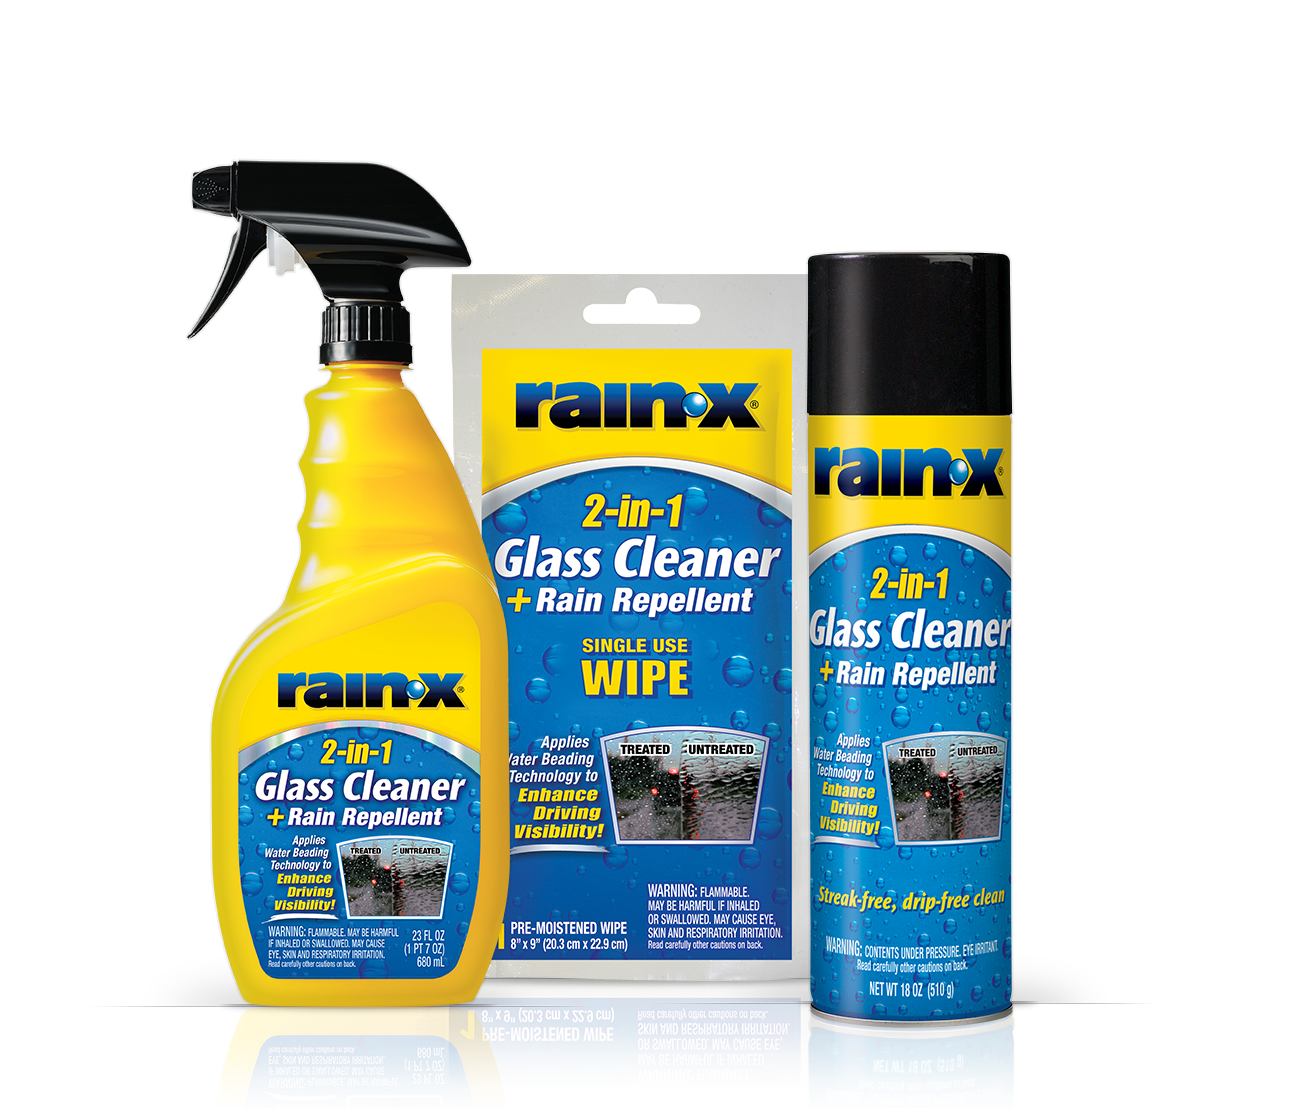 Rain-X 2-in-1 Glass Cleaner + Rain Repellent